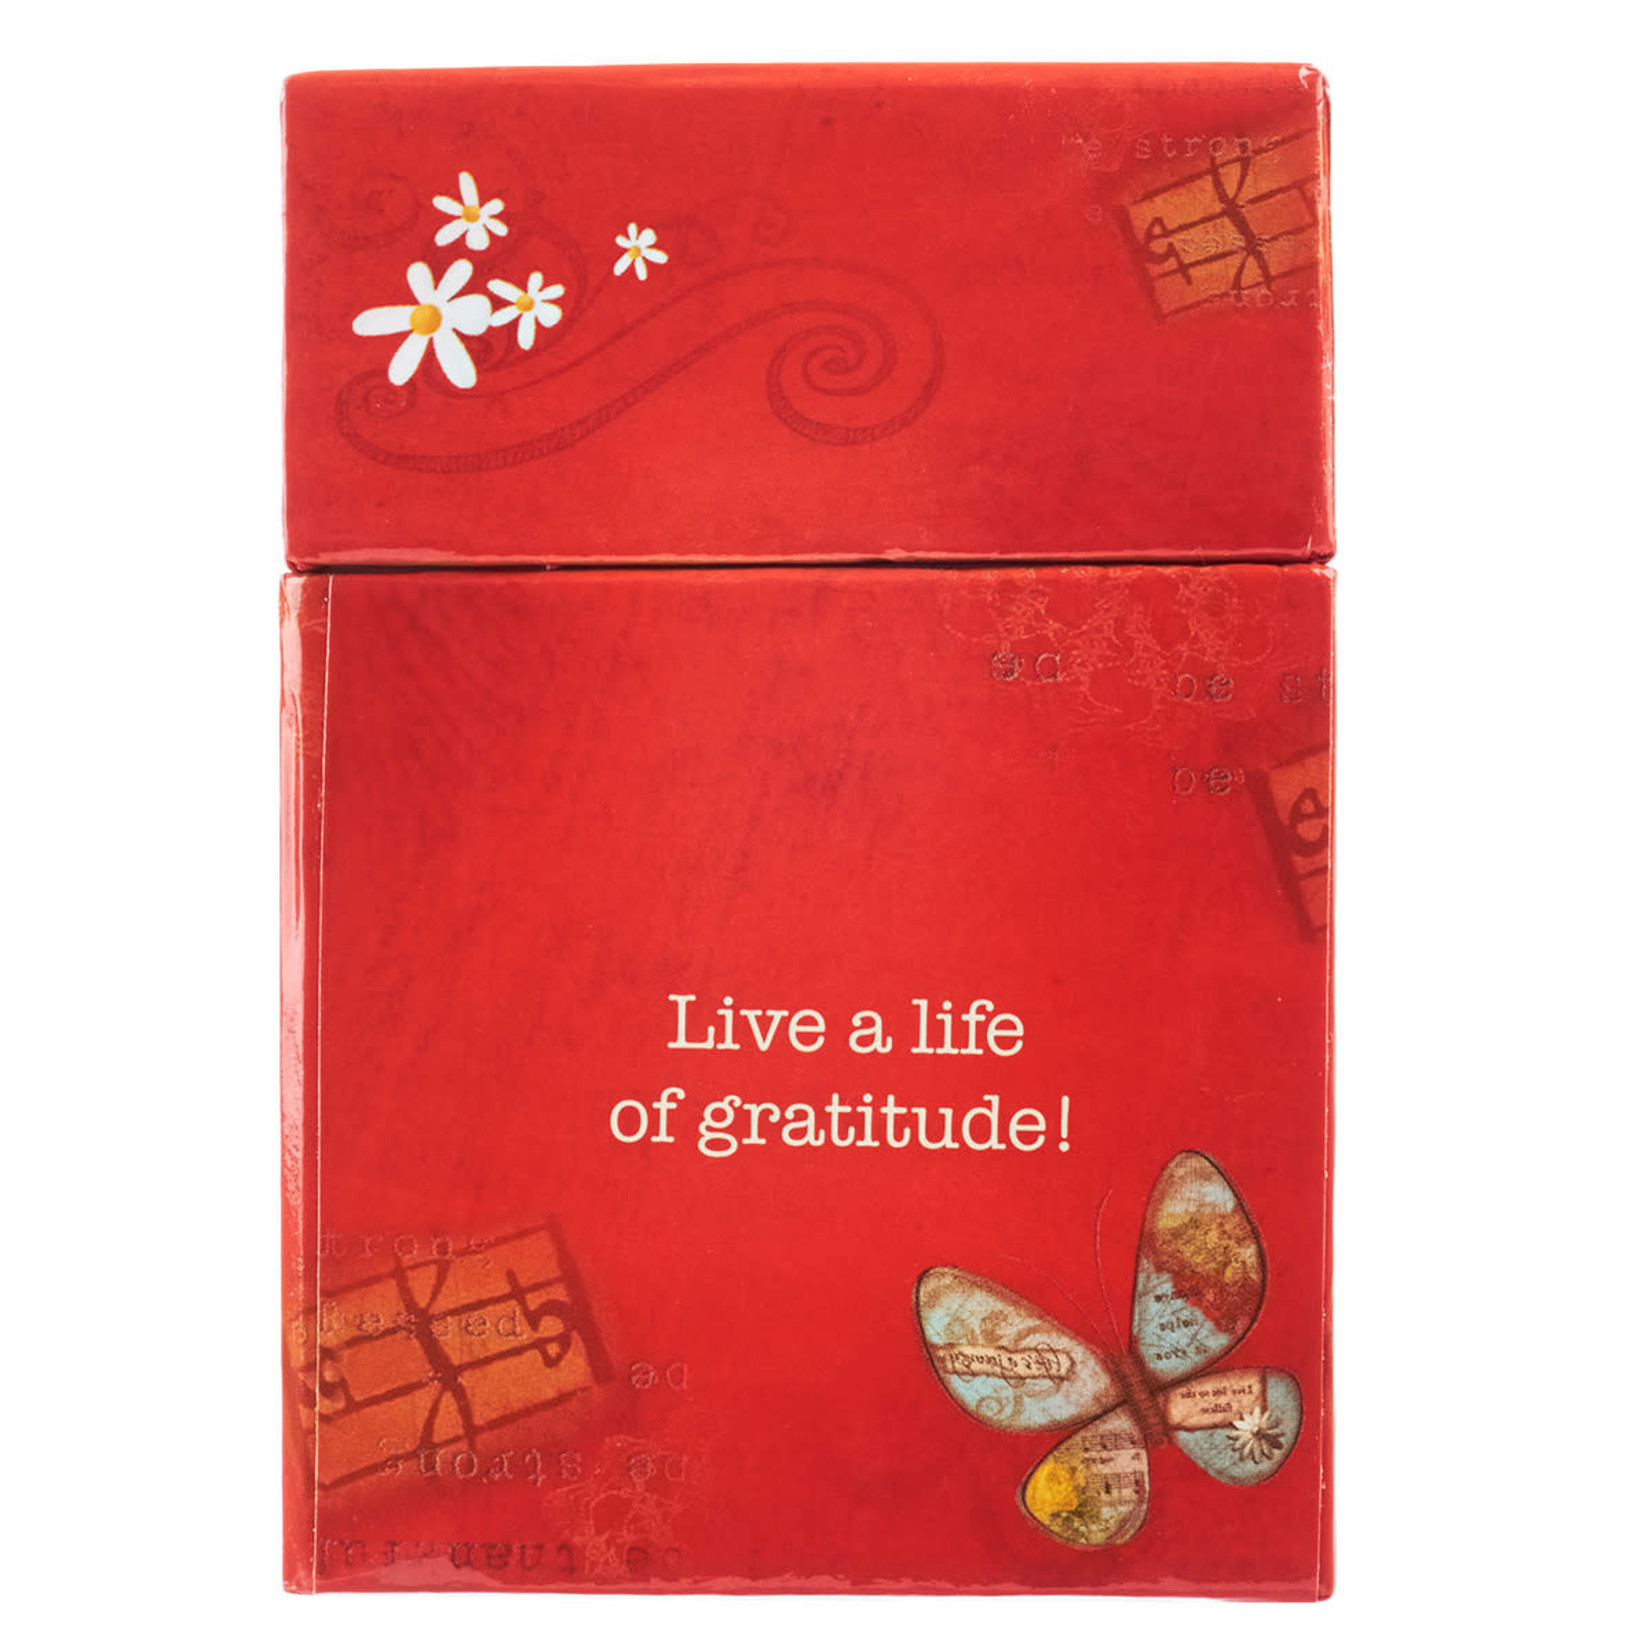 Christian Art Gifts Box of Blessings - A Grateful Heart